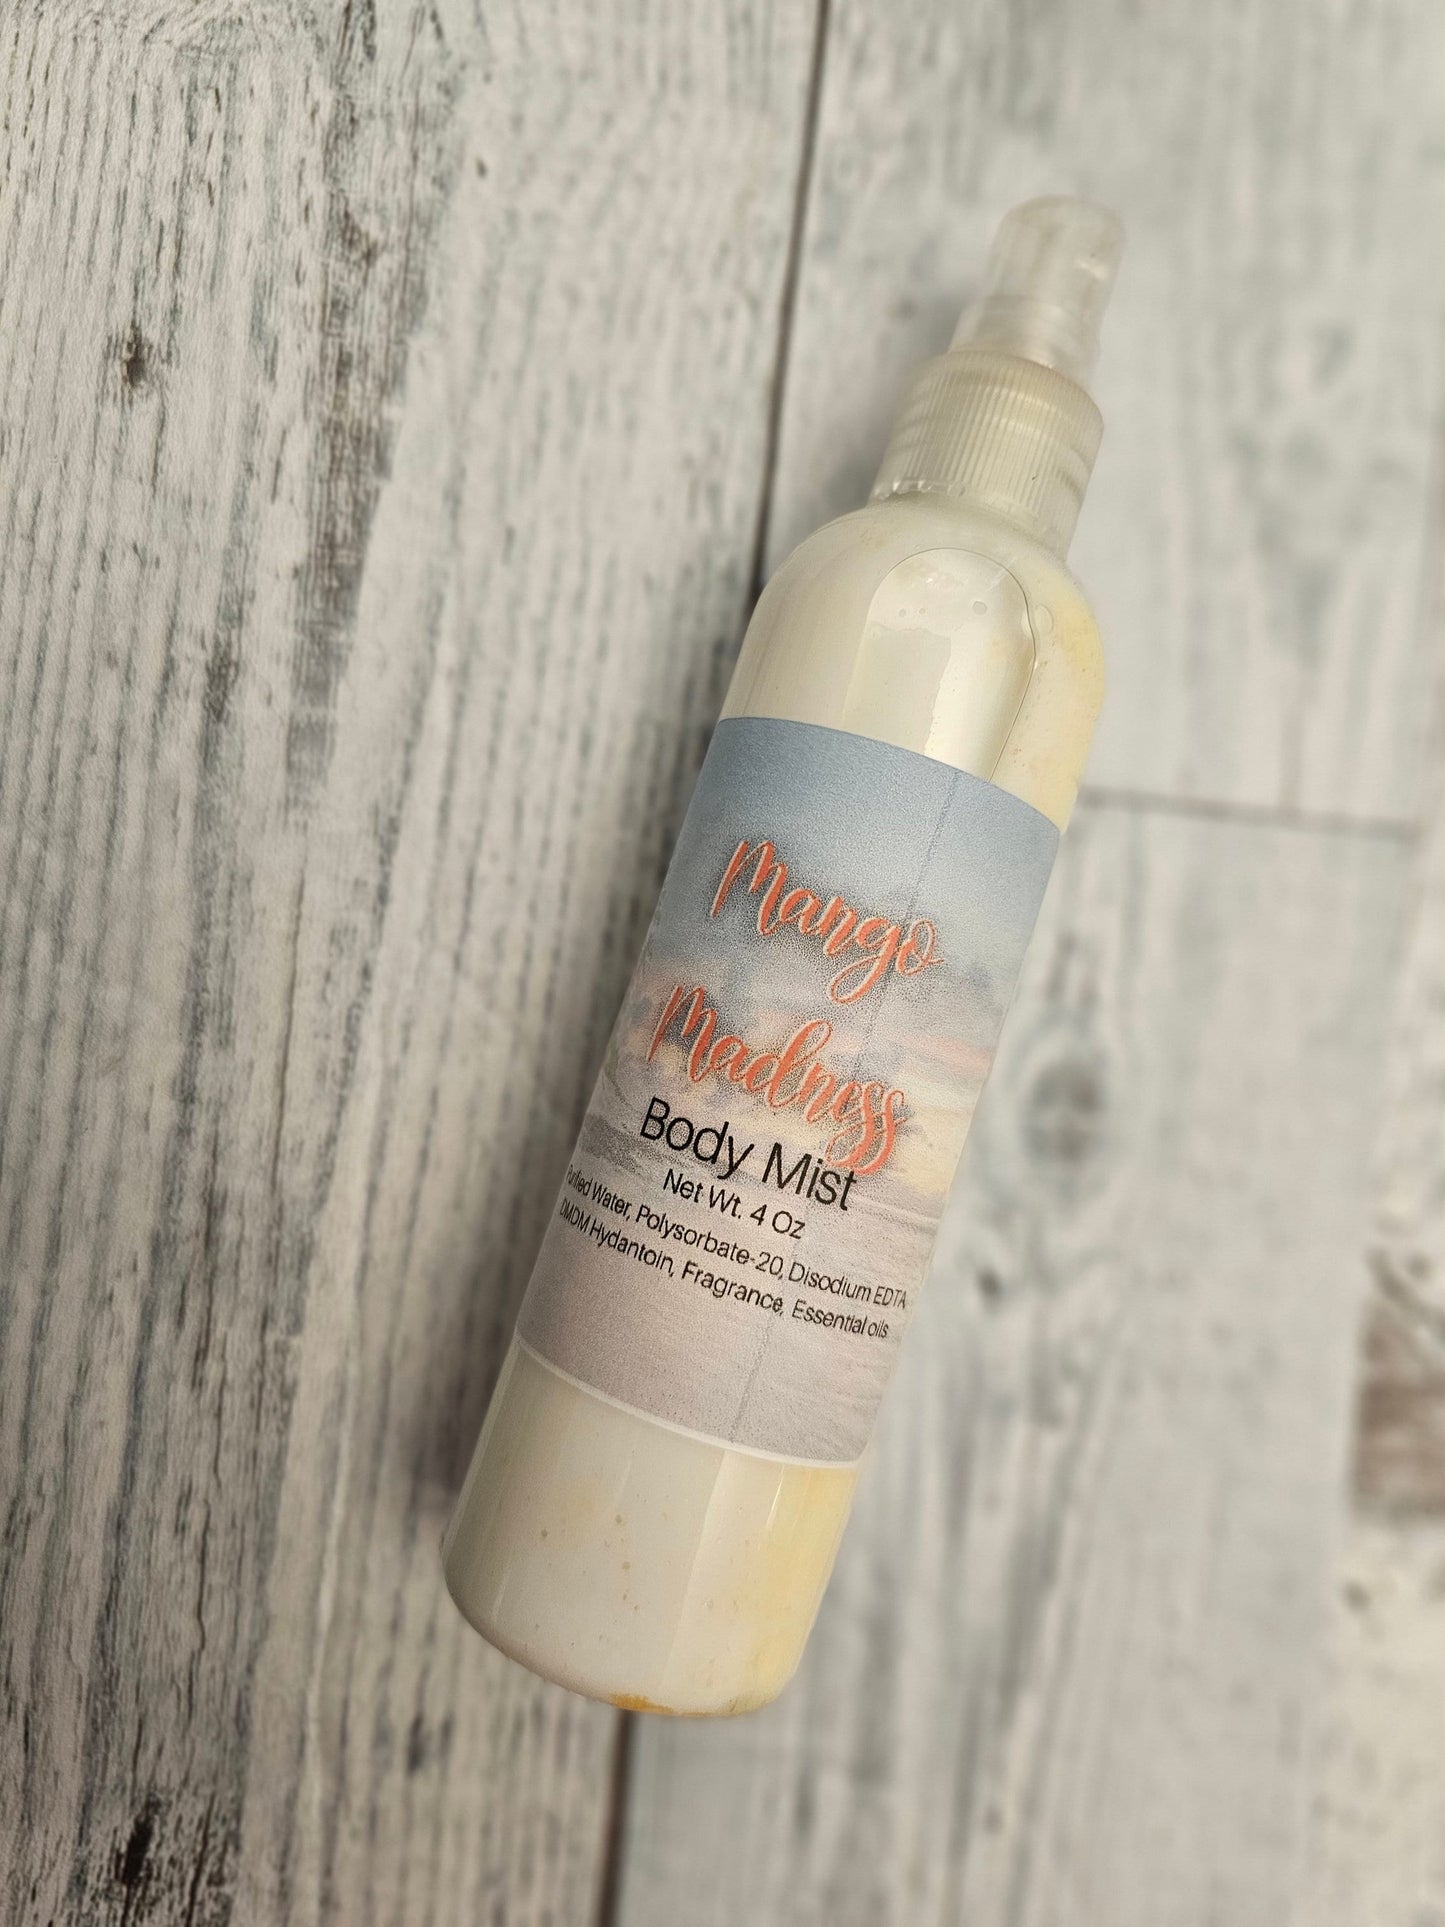 Mango Body Spray, Happiness Spell, Magick Products 4 oz